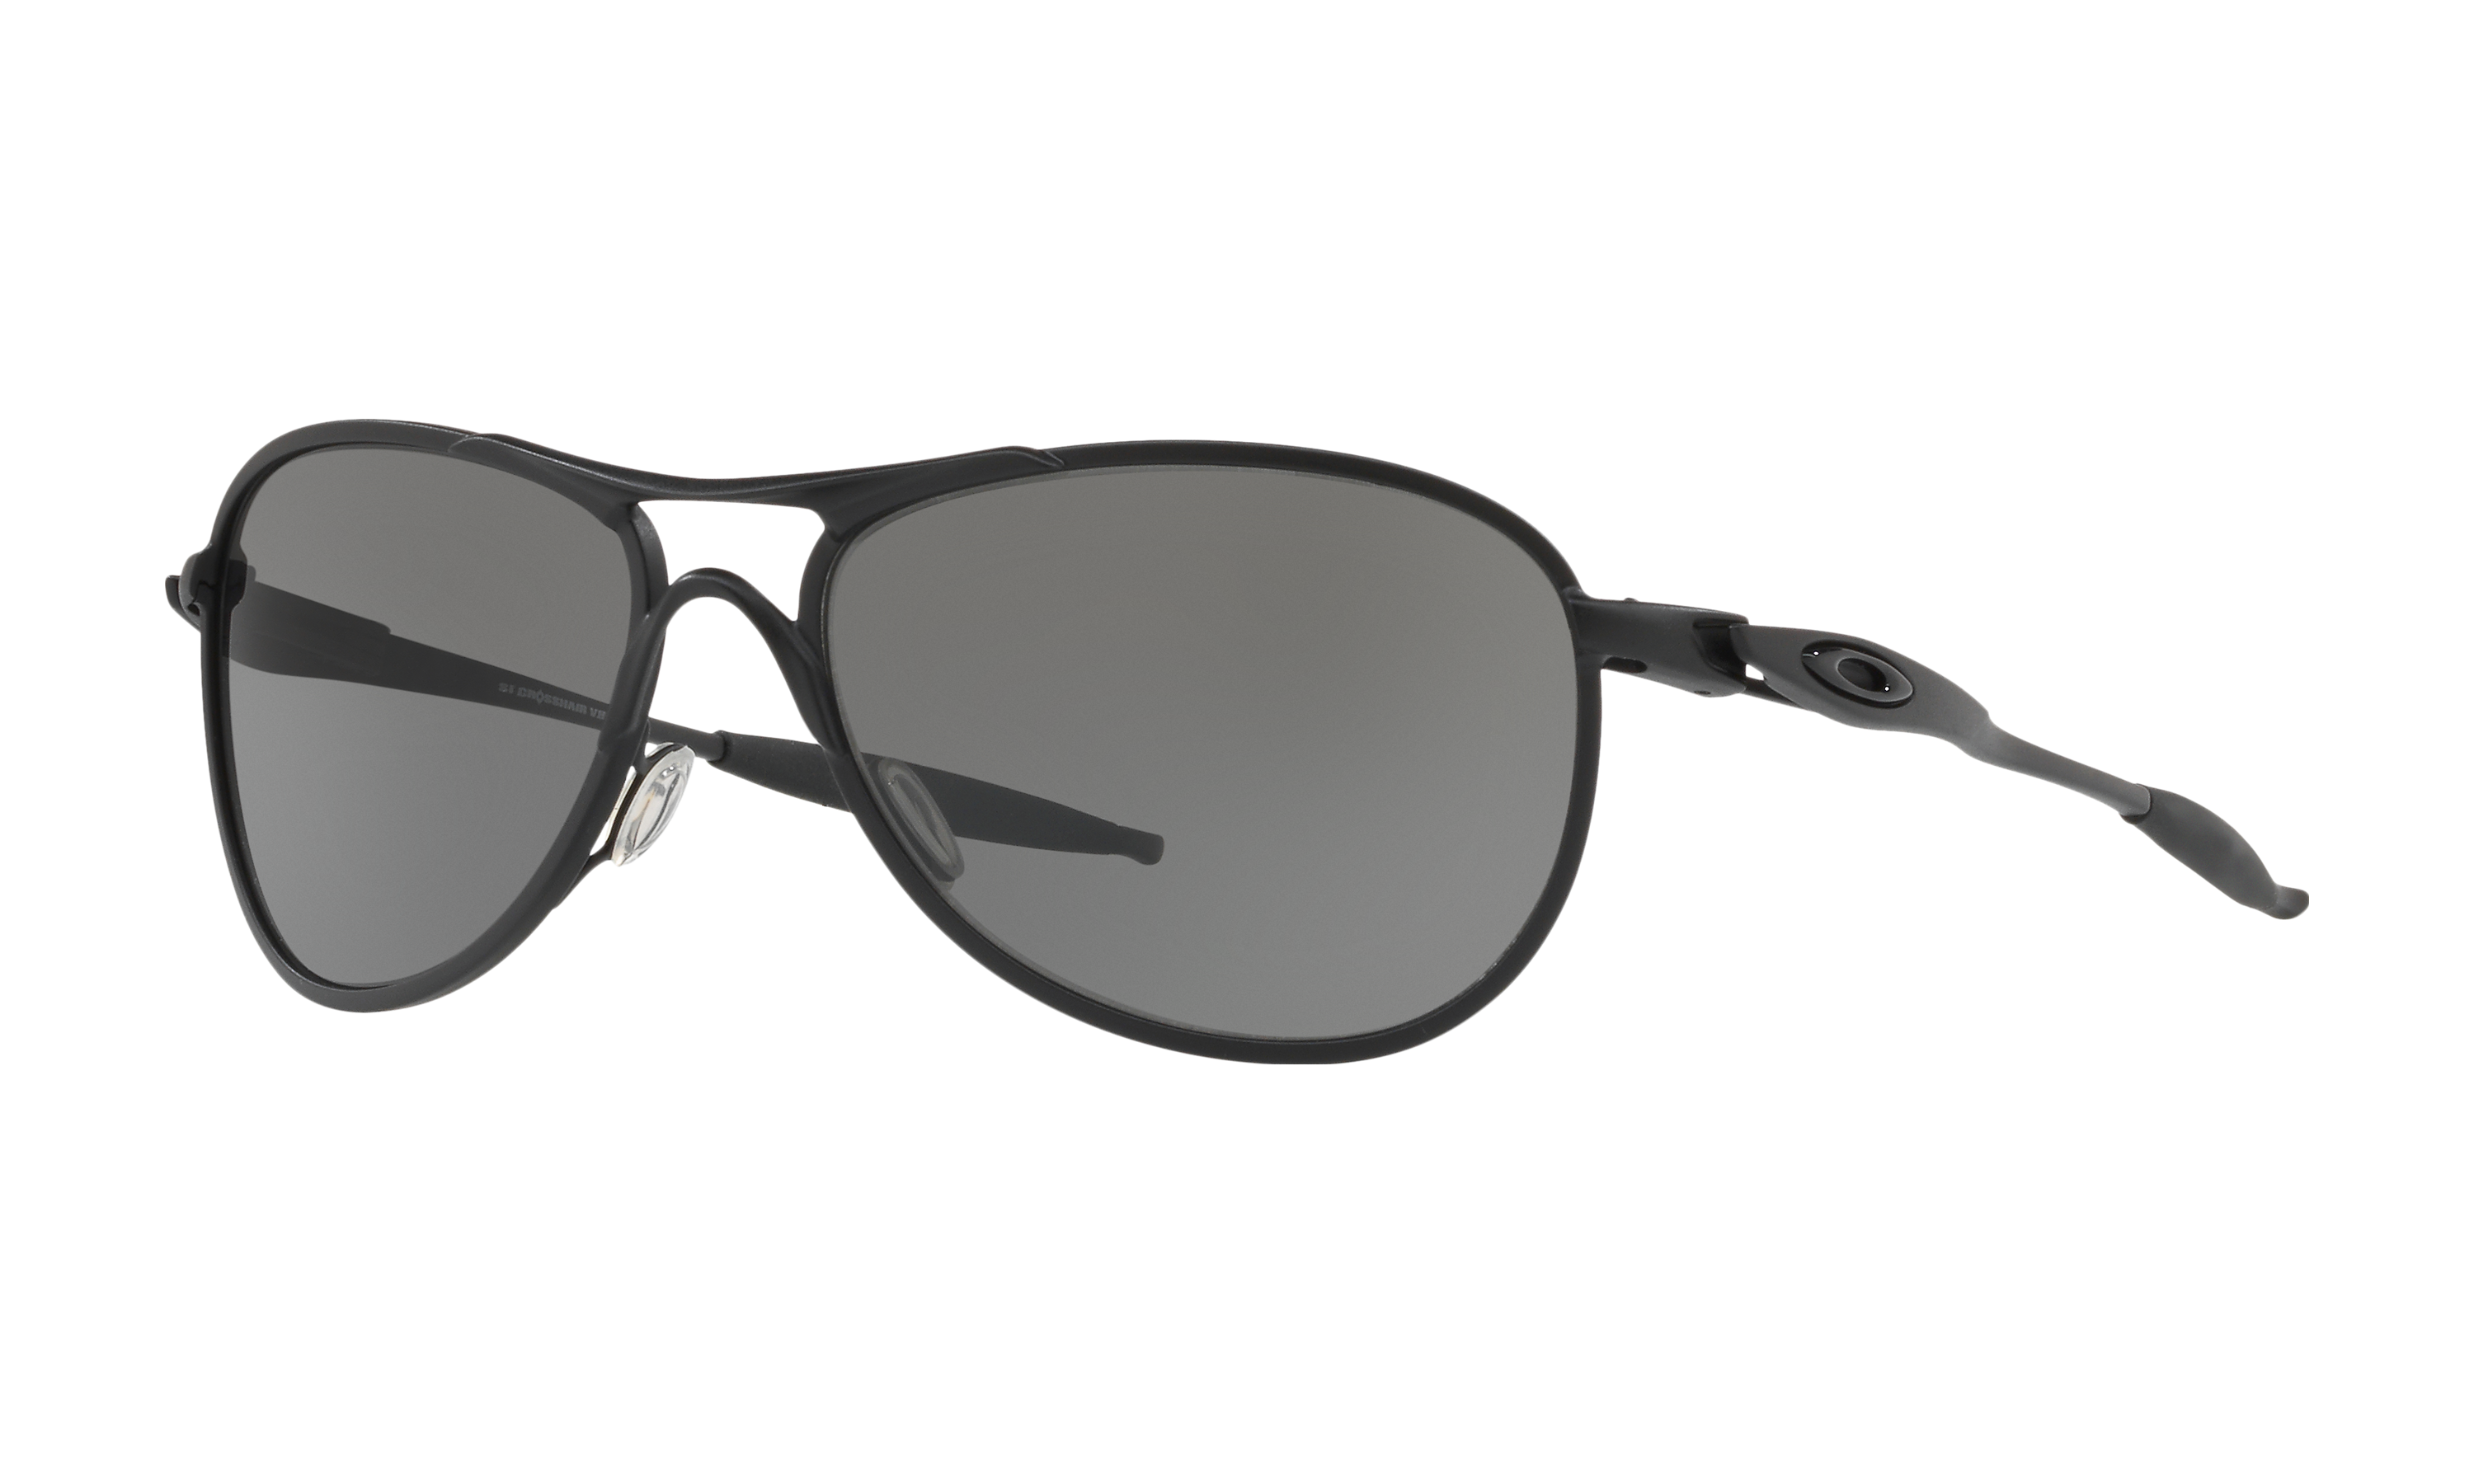 oakley si ballistic crosshair 2.0 sunglasses with gunmetal frame and grey lens